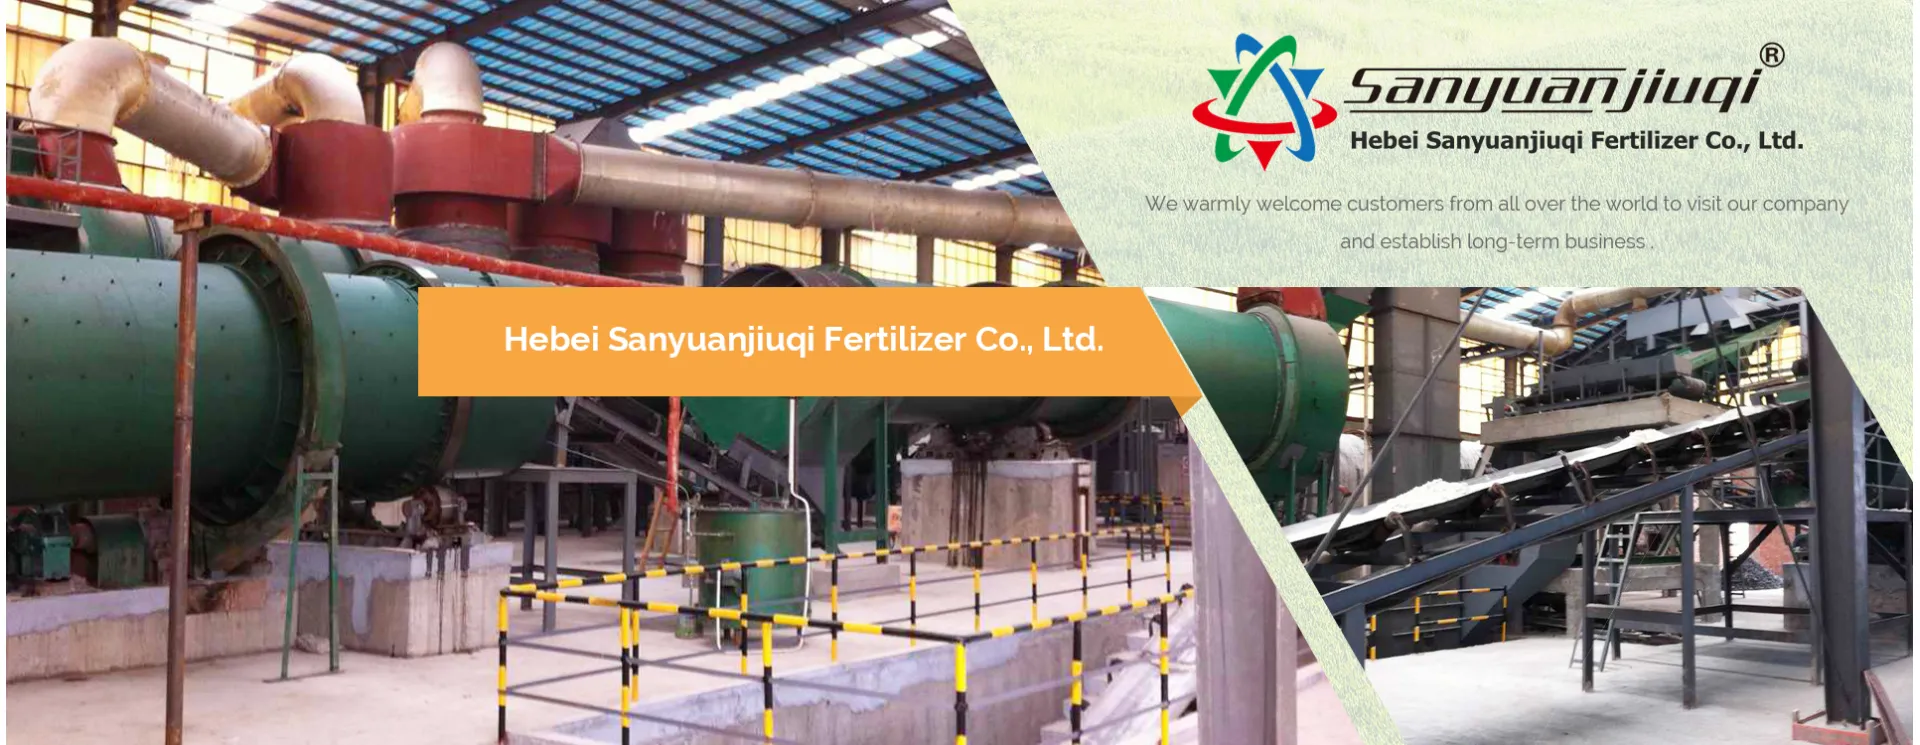 شركة Hebei Sanyuanjiuqi Fertilizer Co.، Ltd.